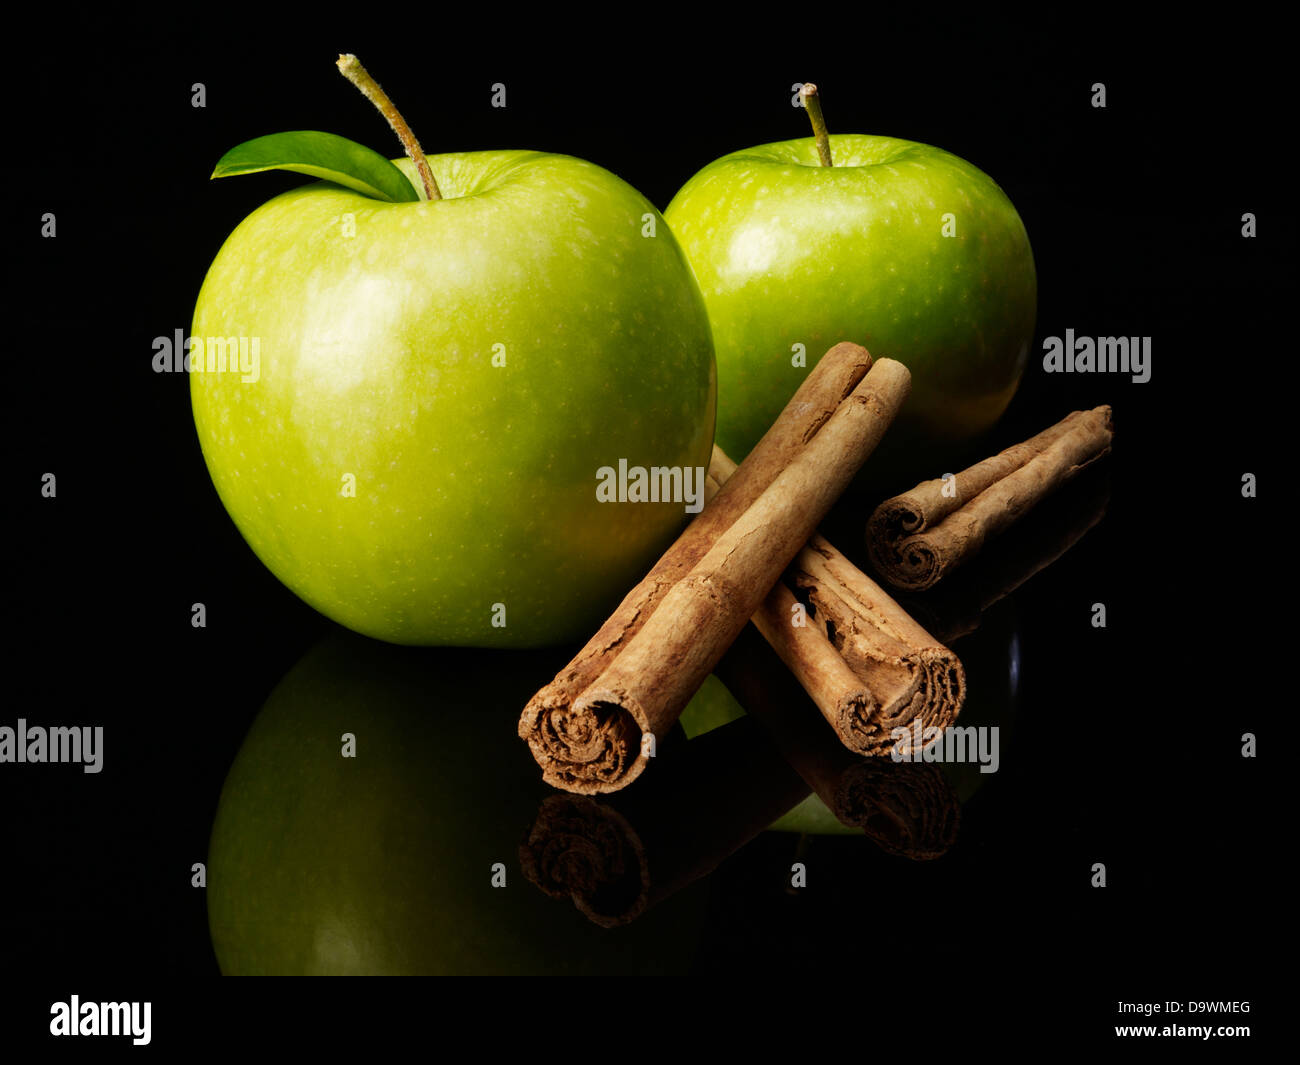 green apple Stock Photo